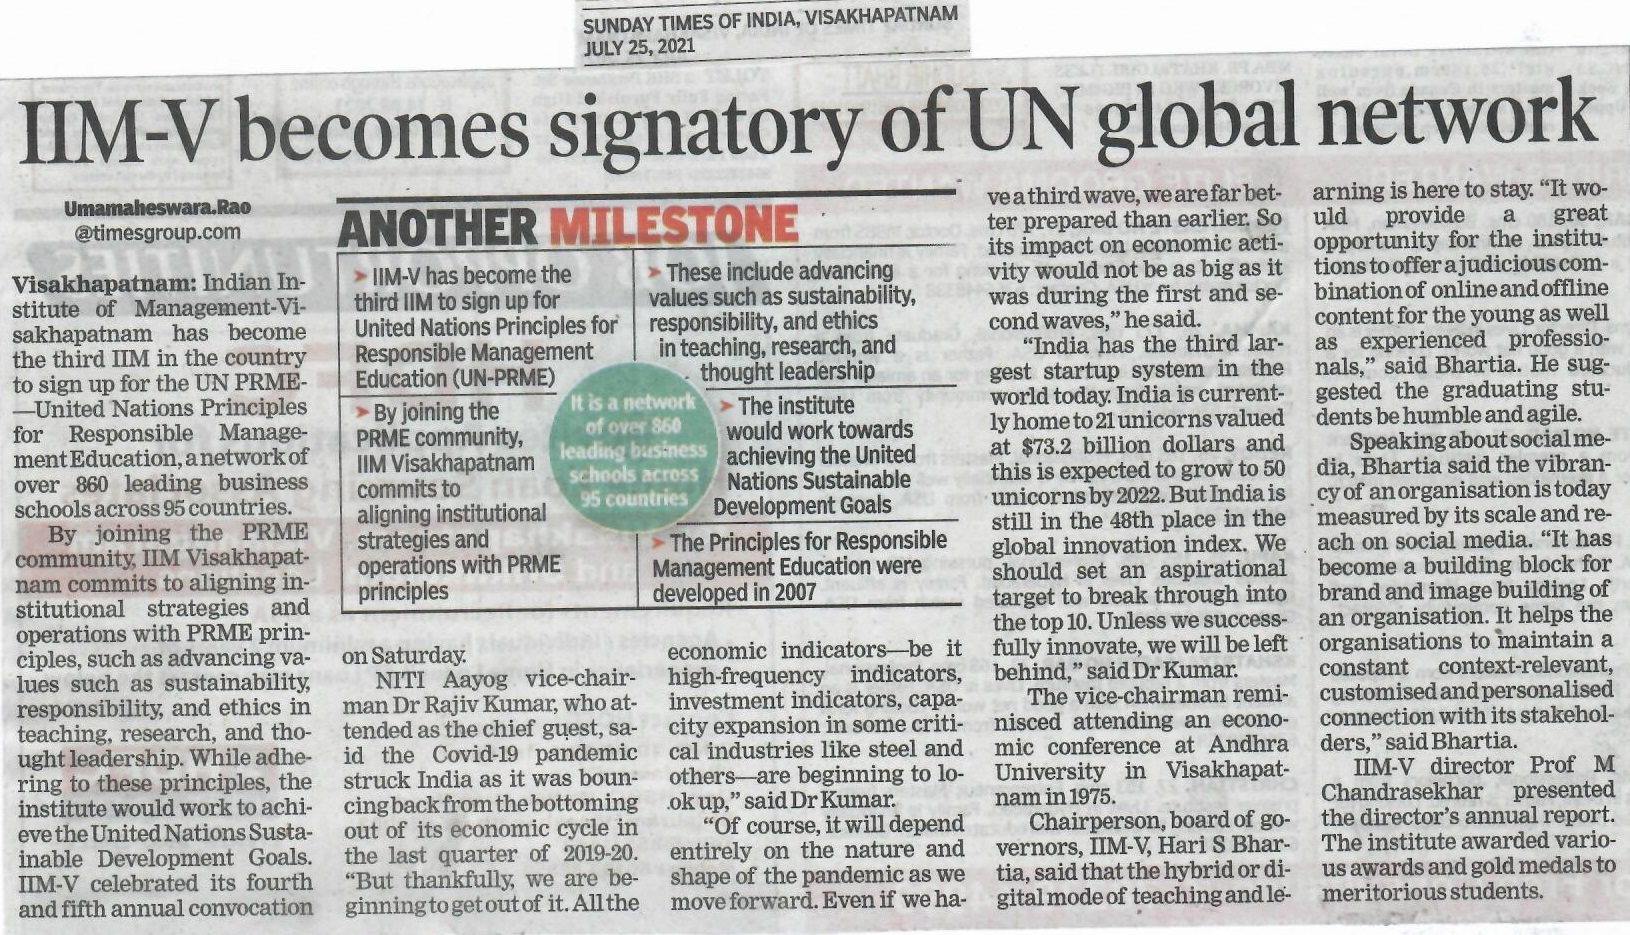 IIM-V becomes signatory of UN global network - 25.07.2021